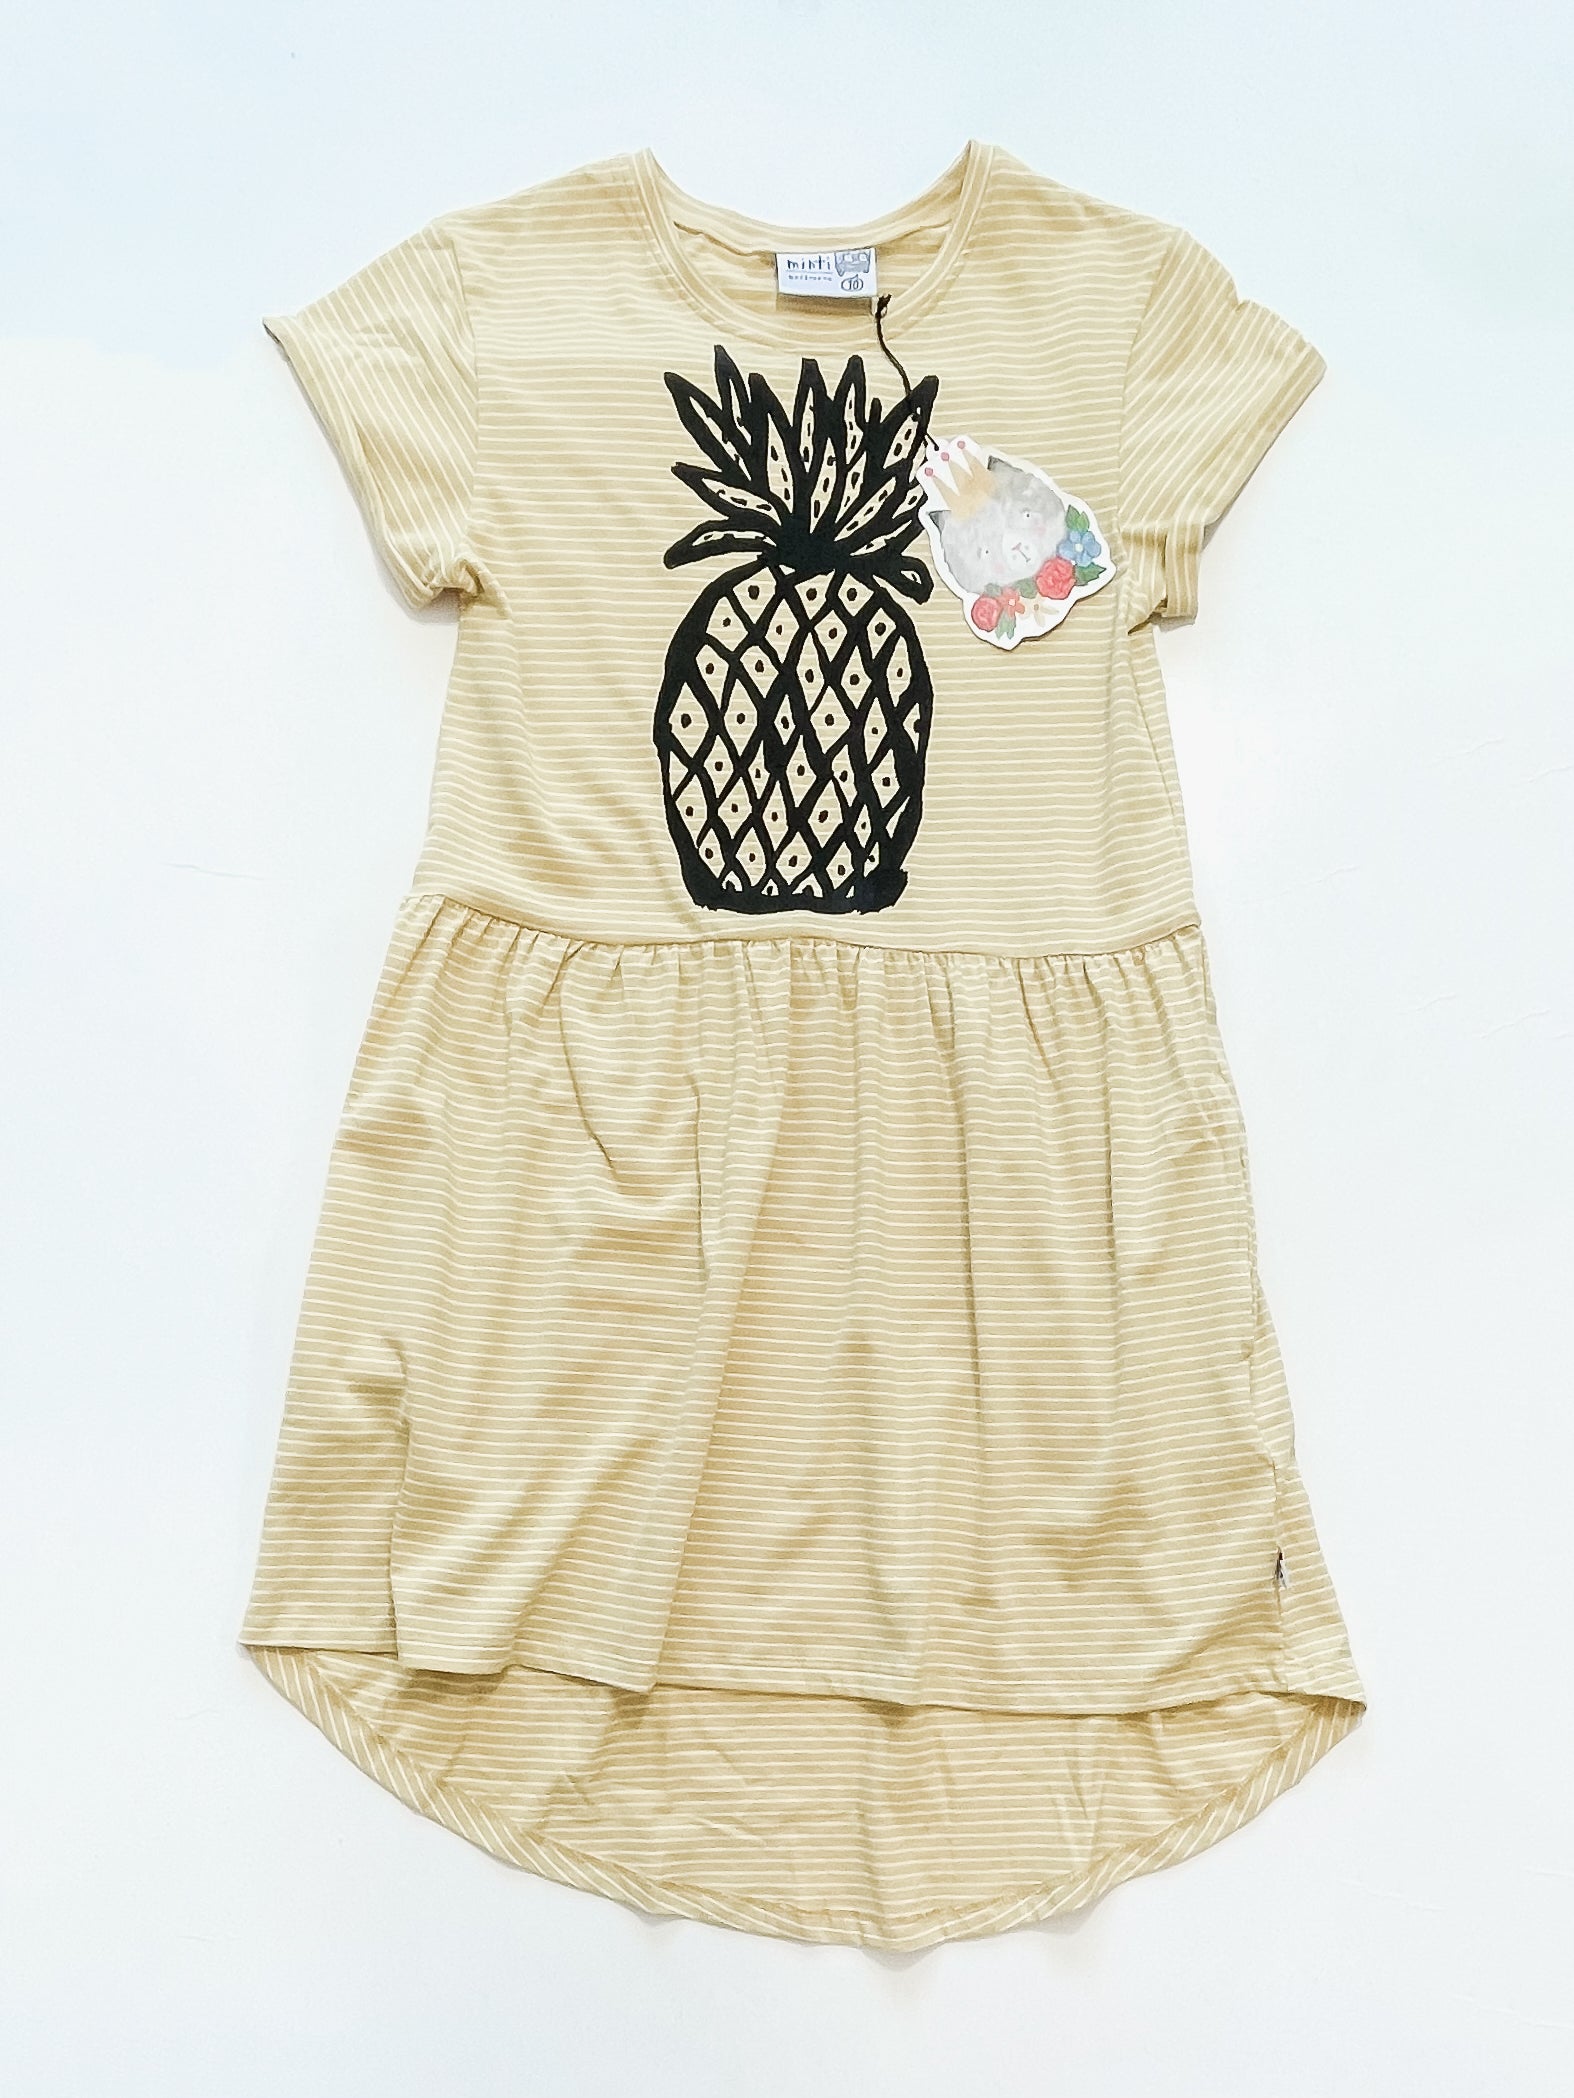 BNWT Minti sketched pineapple dress (10y)